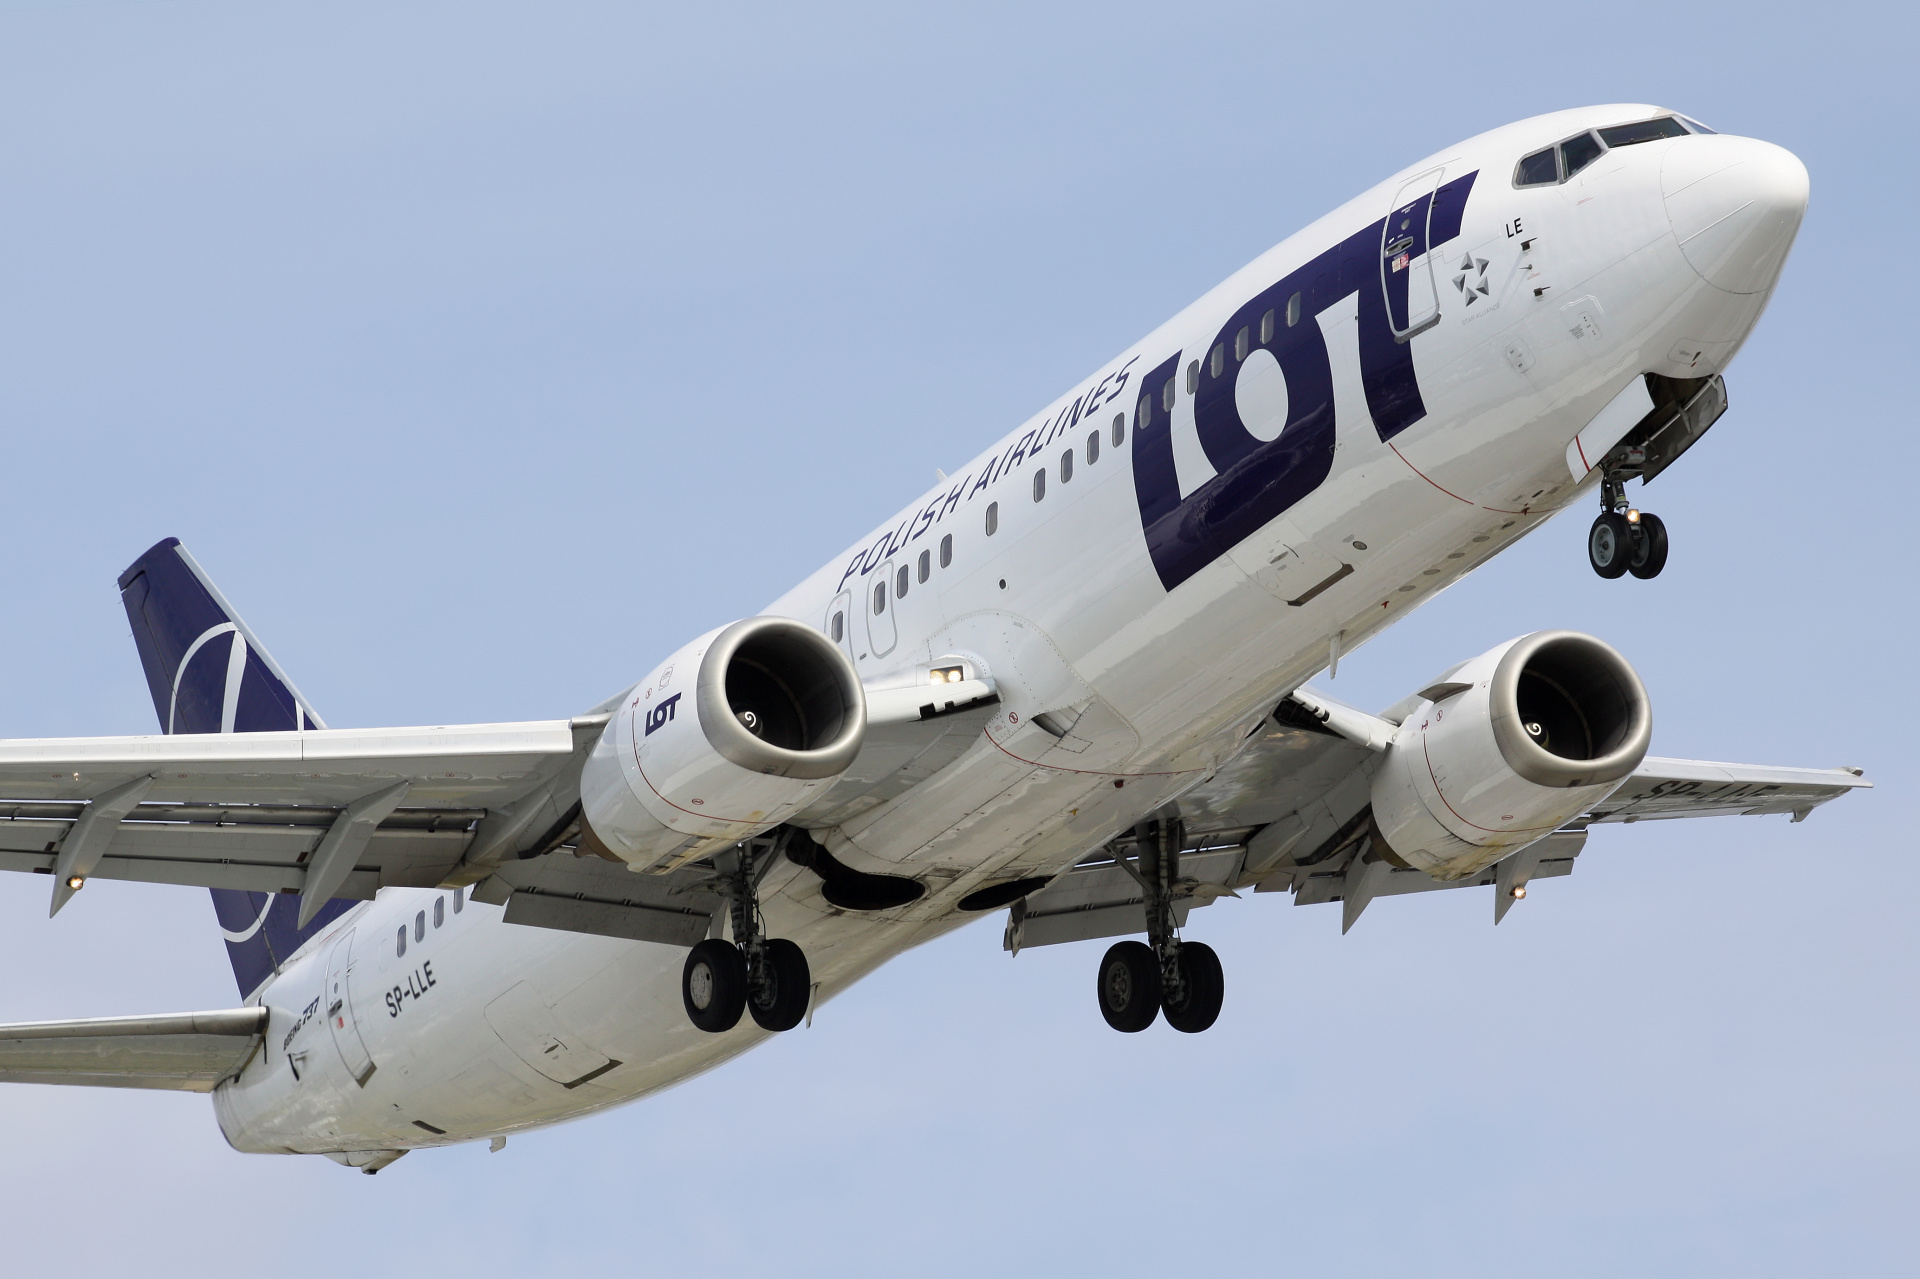 SP-LLE (Samoloty » Spotting na EPWA » Boeing 737-400 » Polskie Linie Lotnicze LOT)